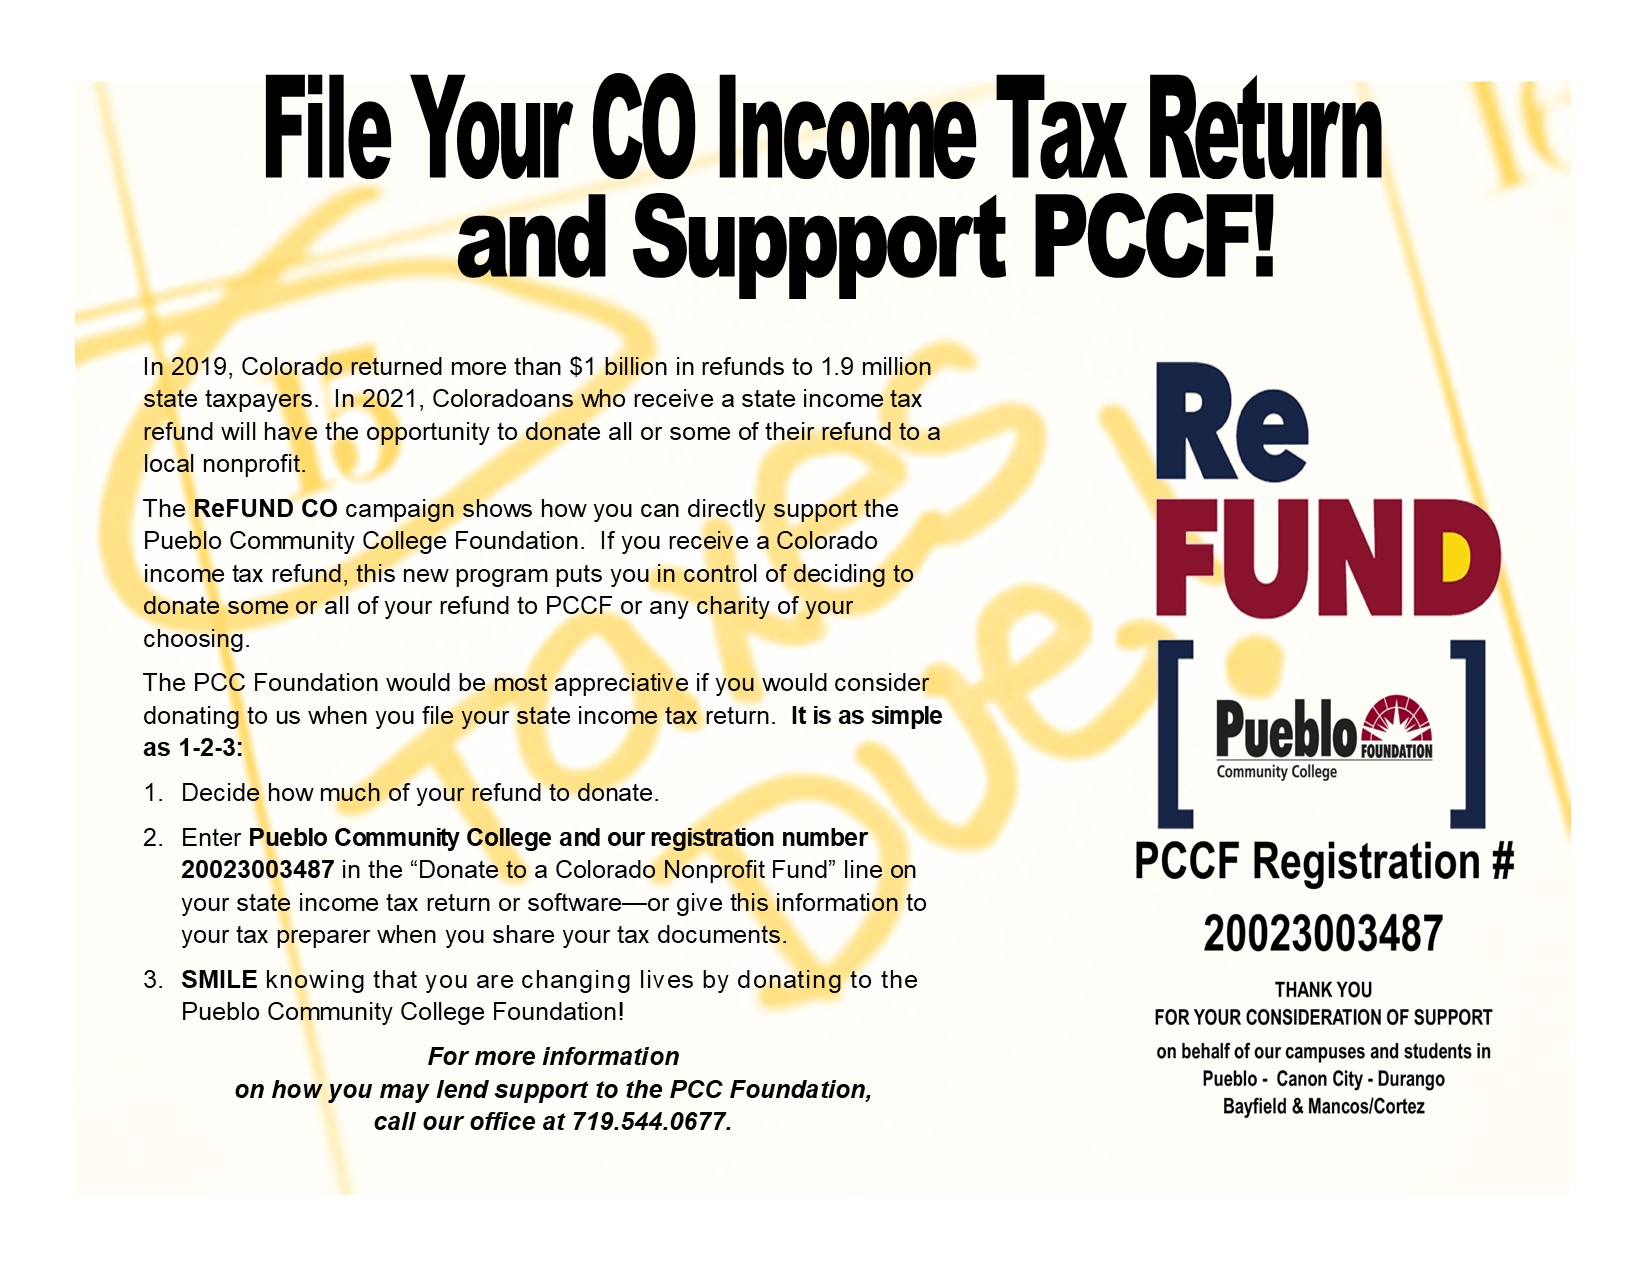 your-2020-colorado-tax-return-could-benefit-pccf-pueblo-community